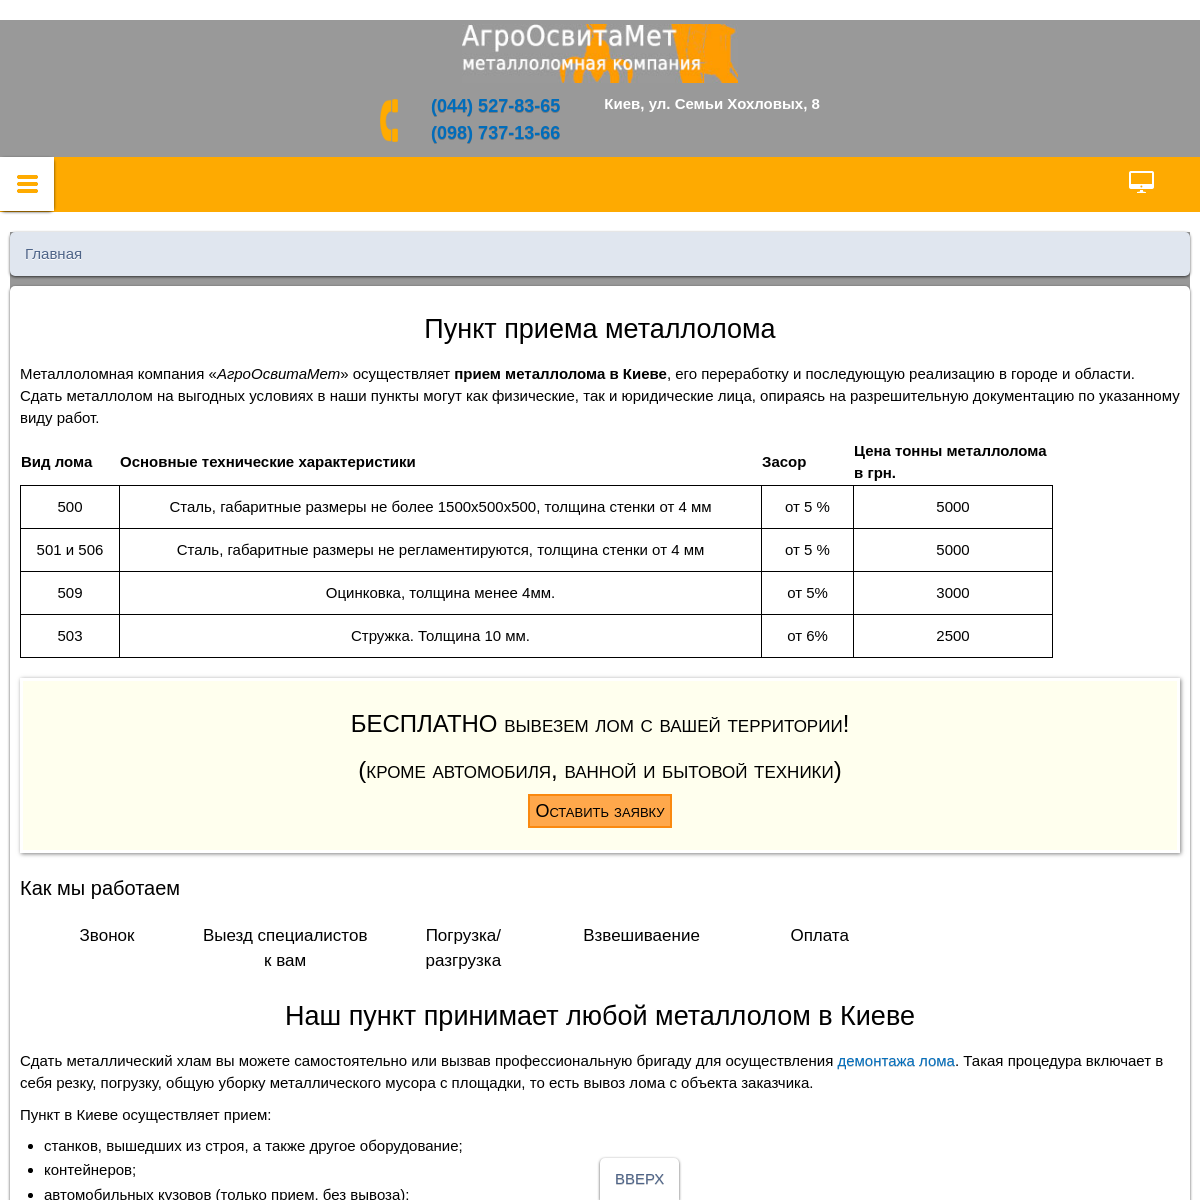 A complete backup of agroosvita-online.com.ua